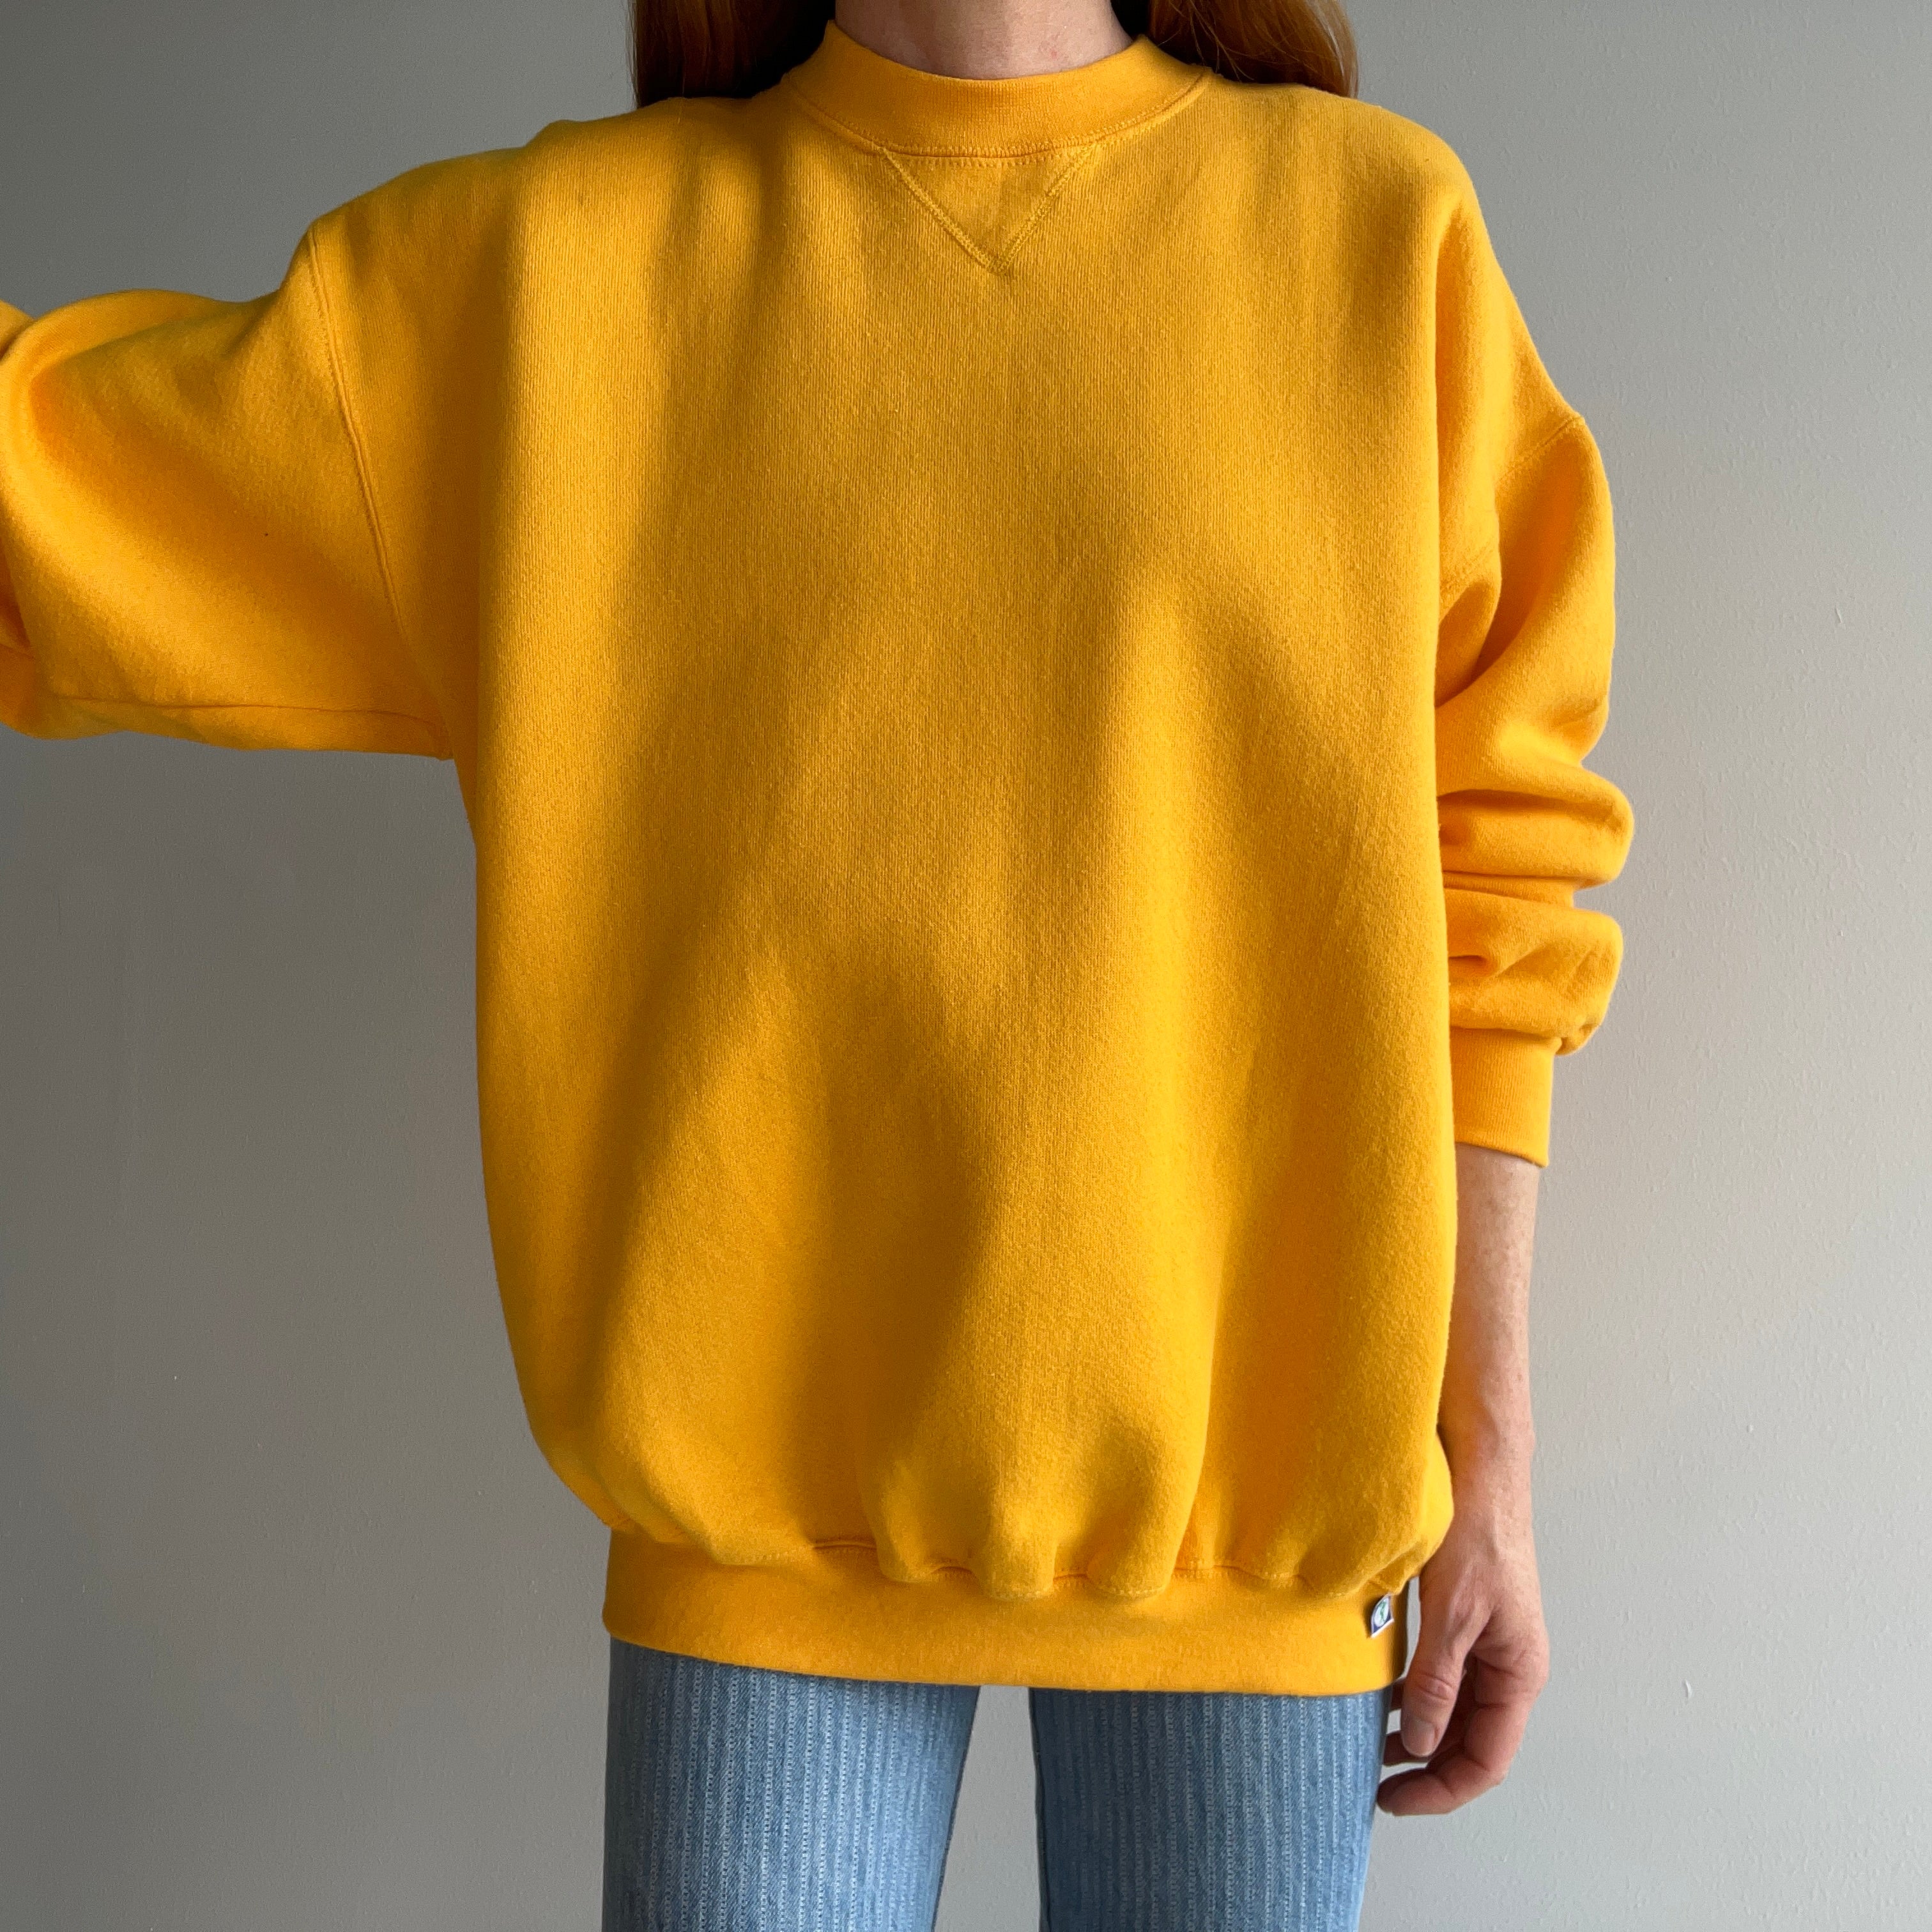 1990s Heavyweight Discus Mustard Yellow Sweatshirt with a Single V